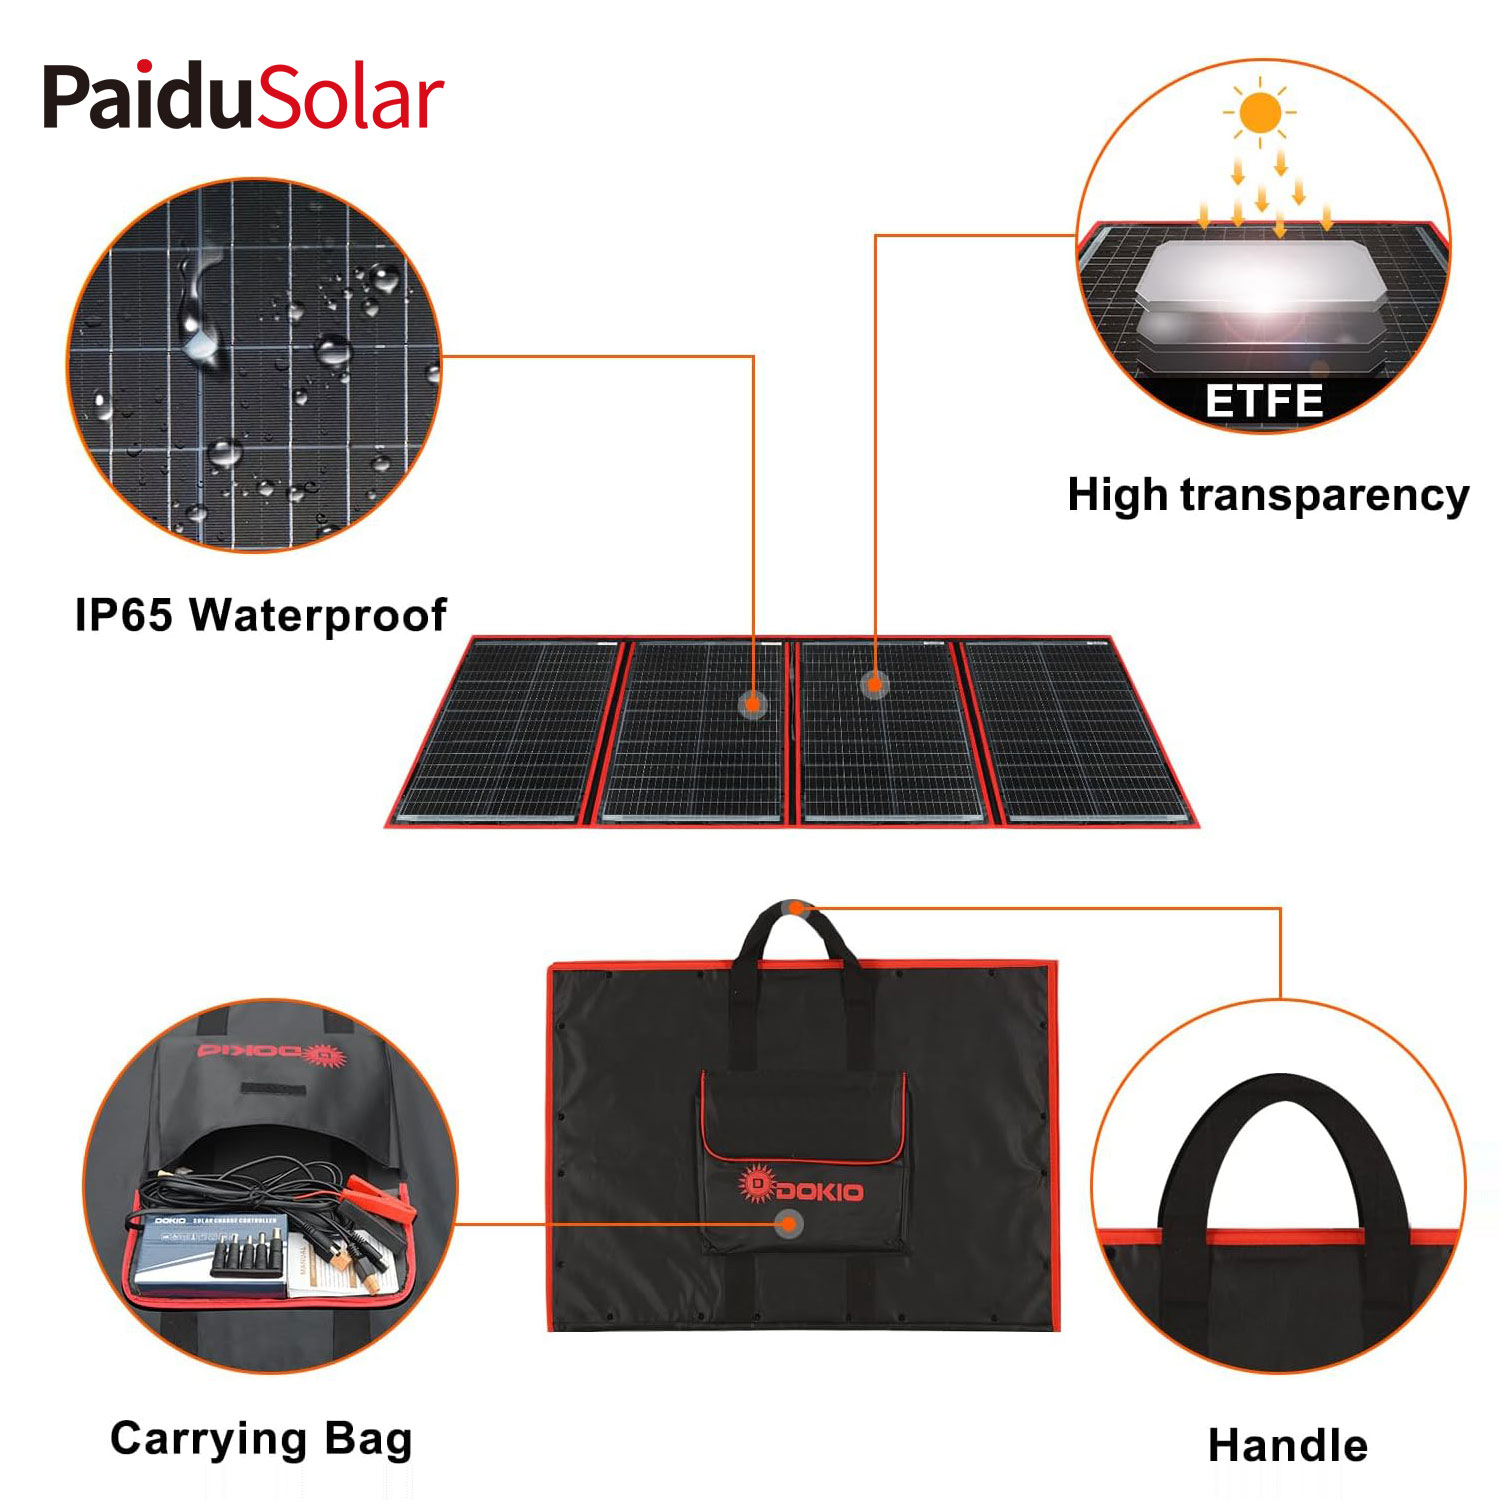 PaiduSolar 220w 18v Portable Foldable Solar Panel Kit အတွက် Rv Camping Trailer အရေးပေါ် ပါဝါ